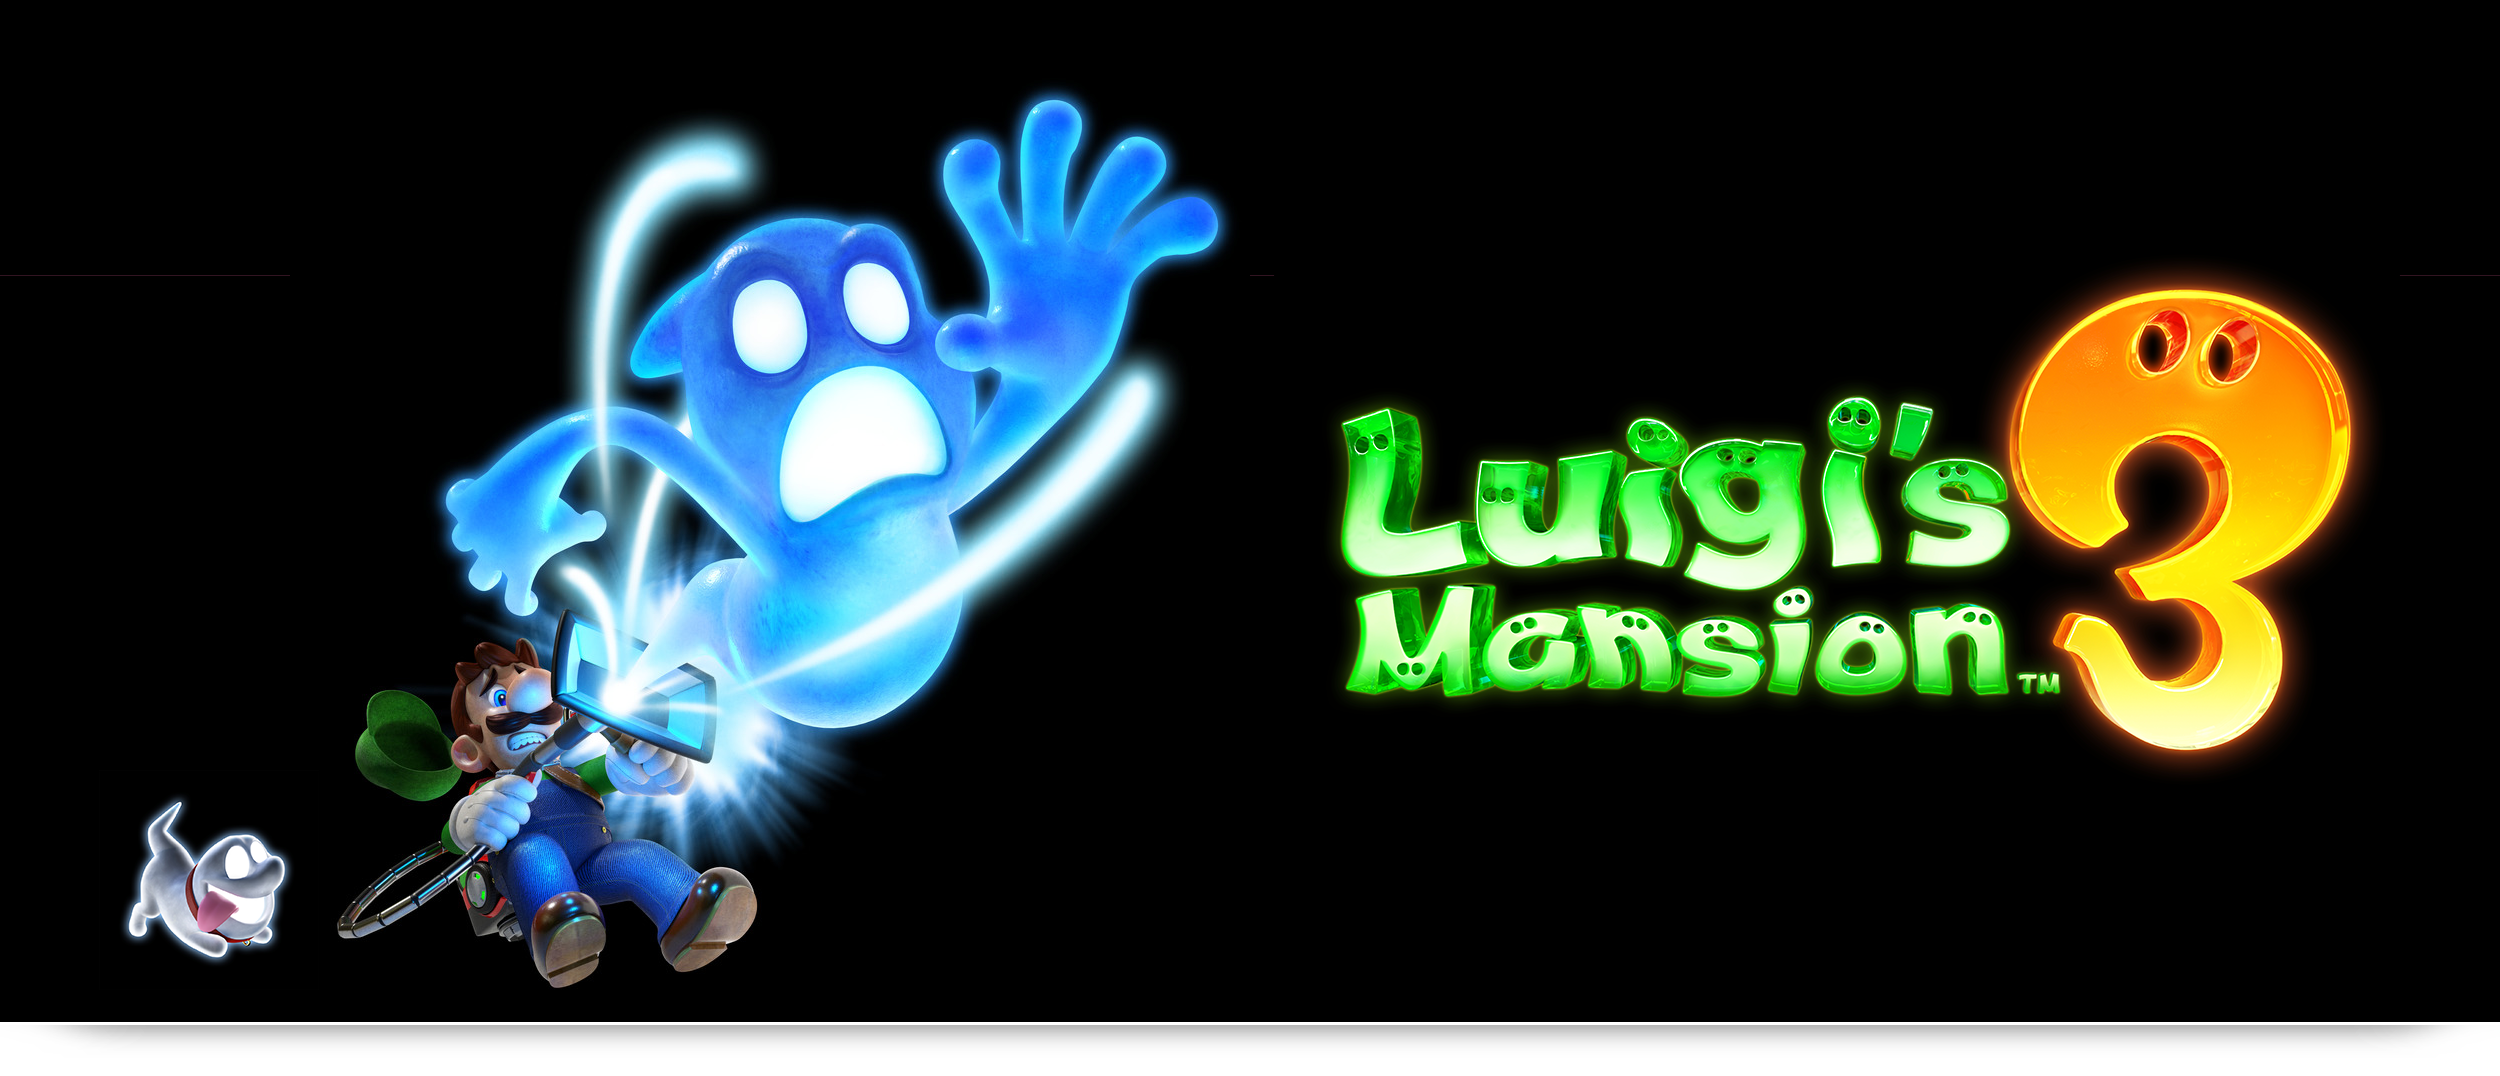 Luigi's Mansion 3: 10 Minutes of Haunted Castle Area Gameplay - E3